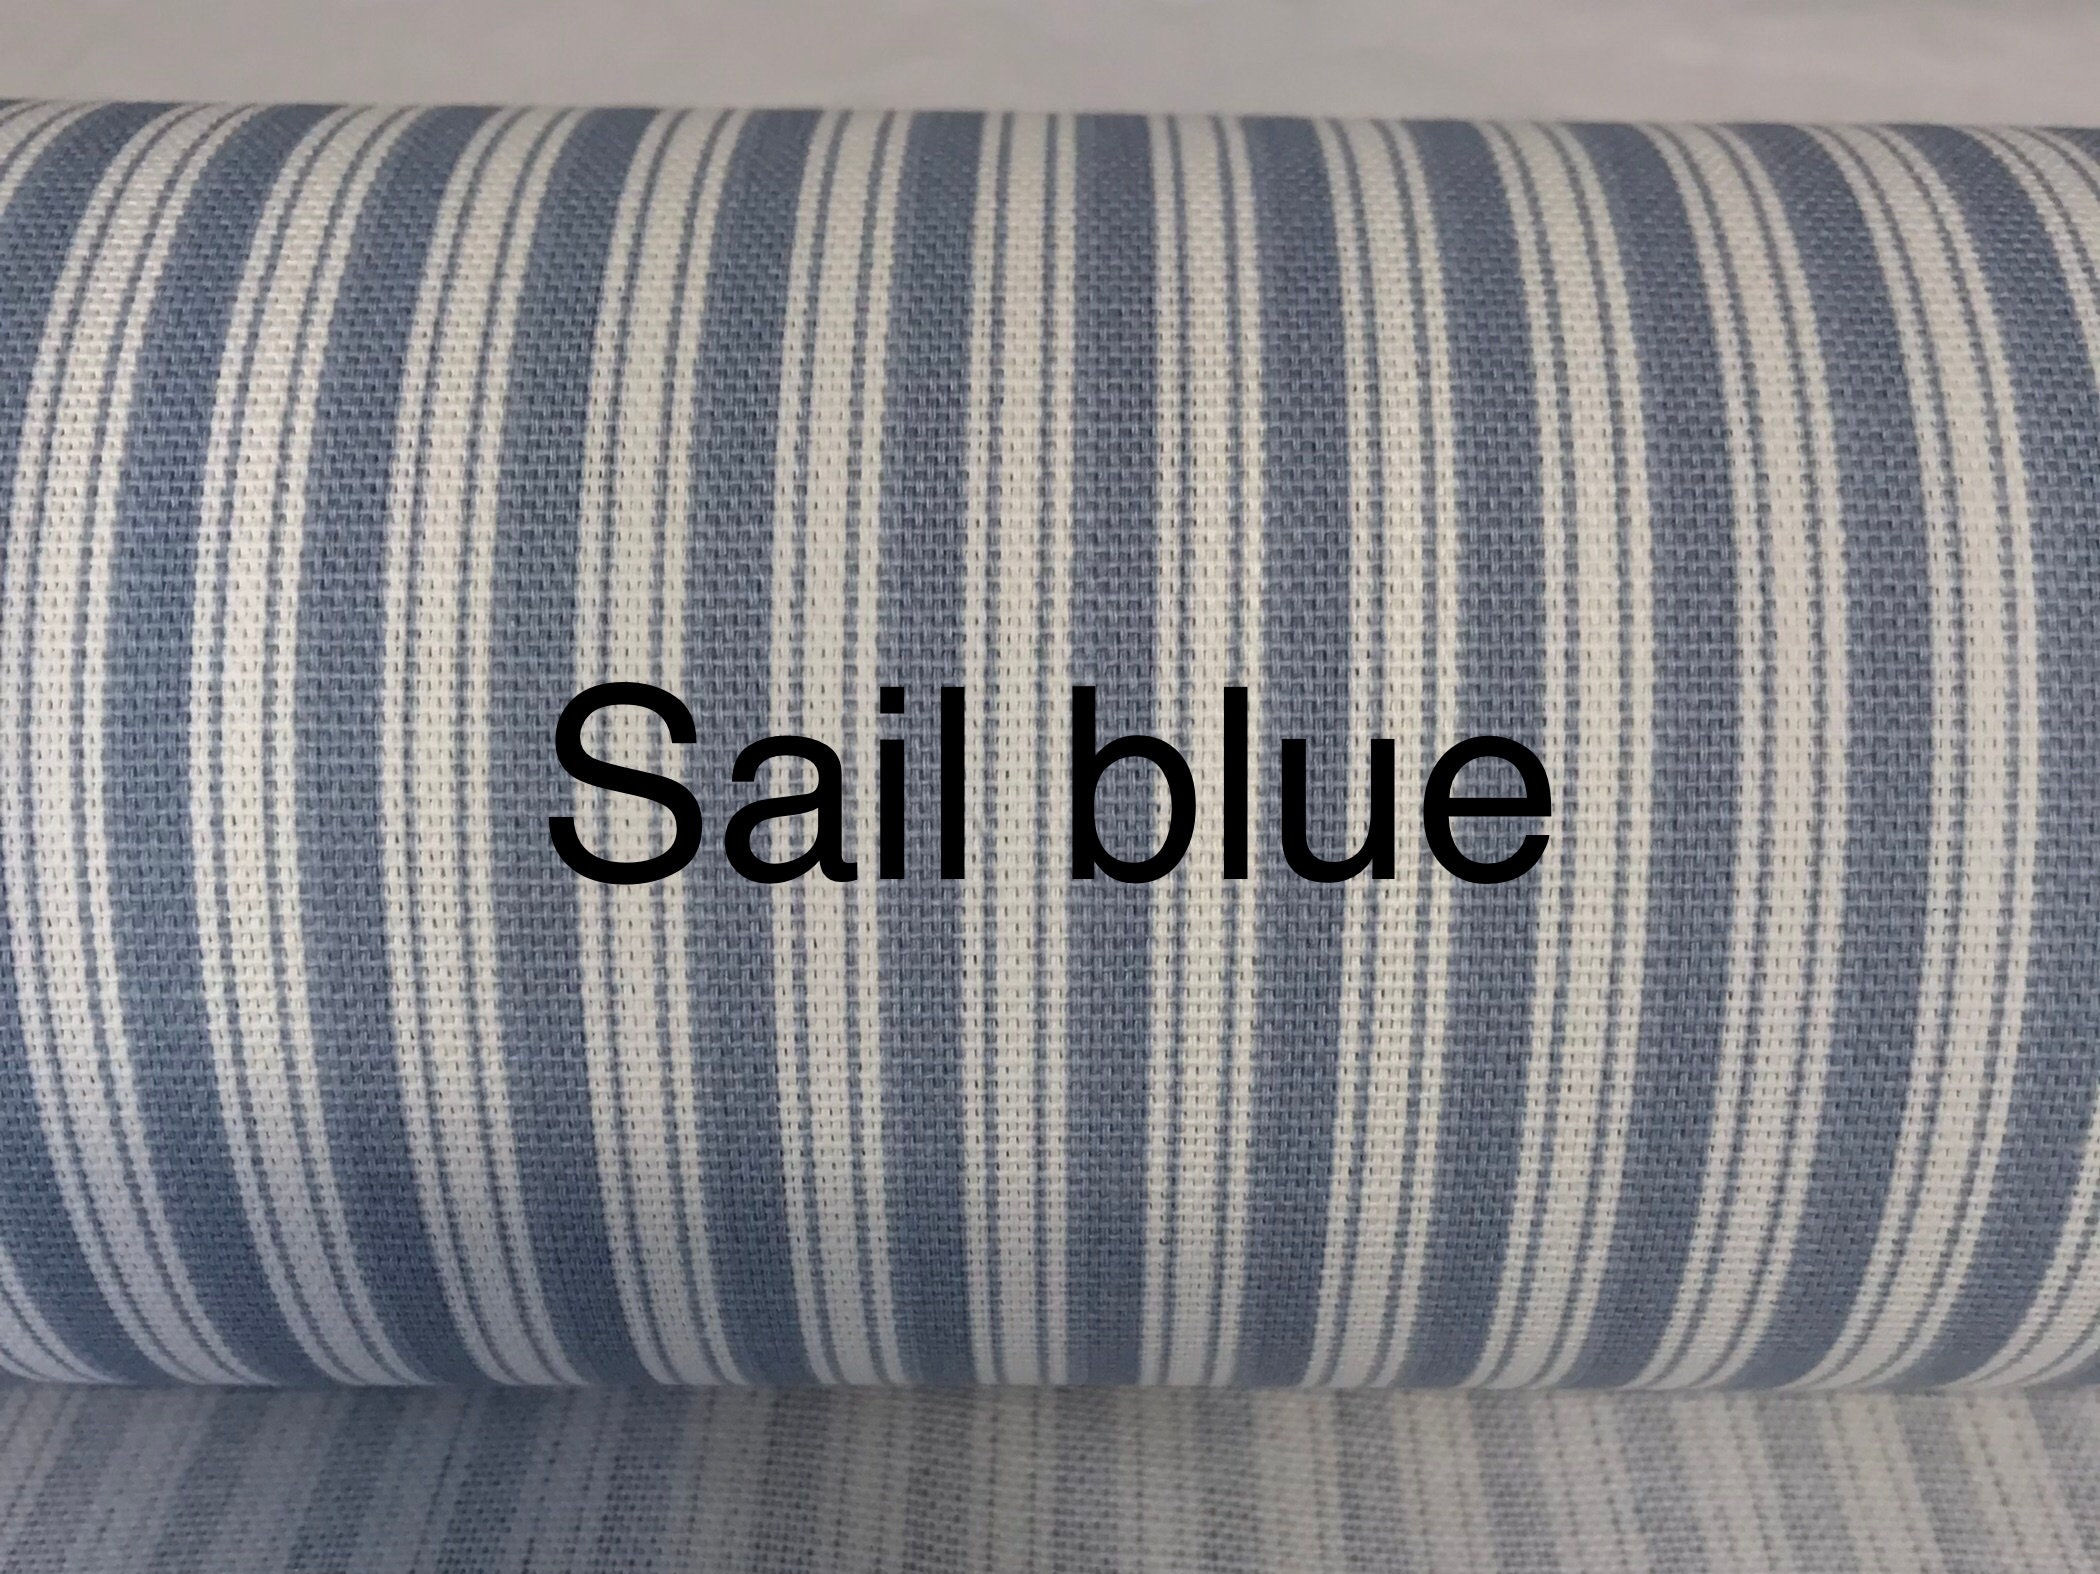 Cream Denim Blue Nautical Ticking Stripe Upholstery Drapery Fabric